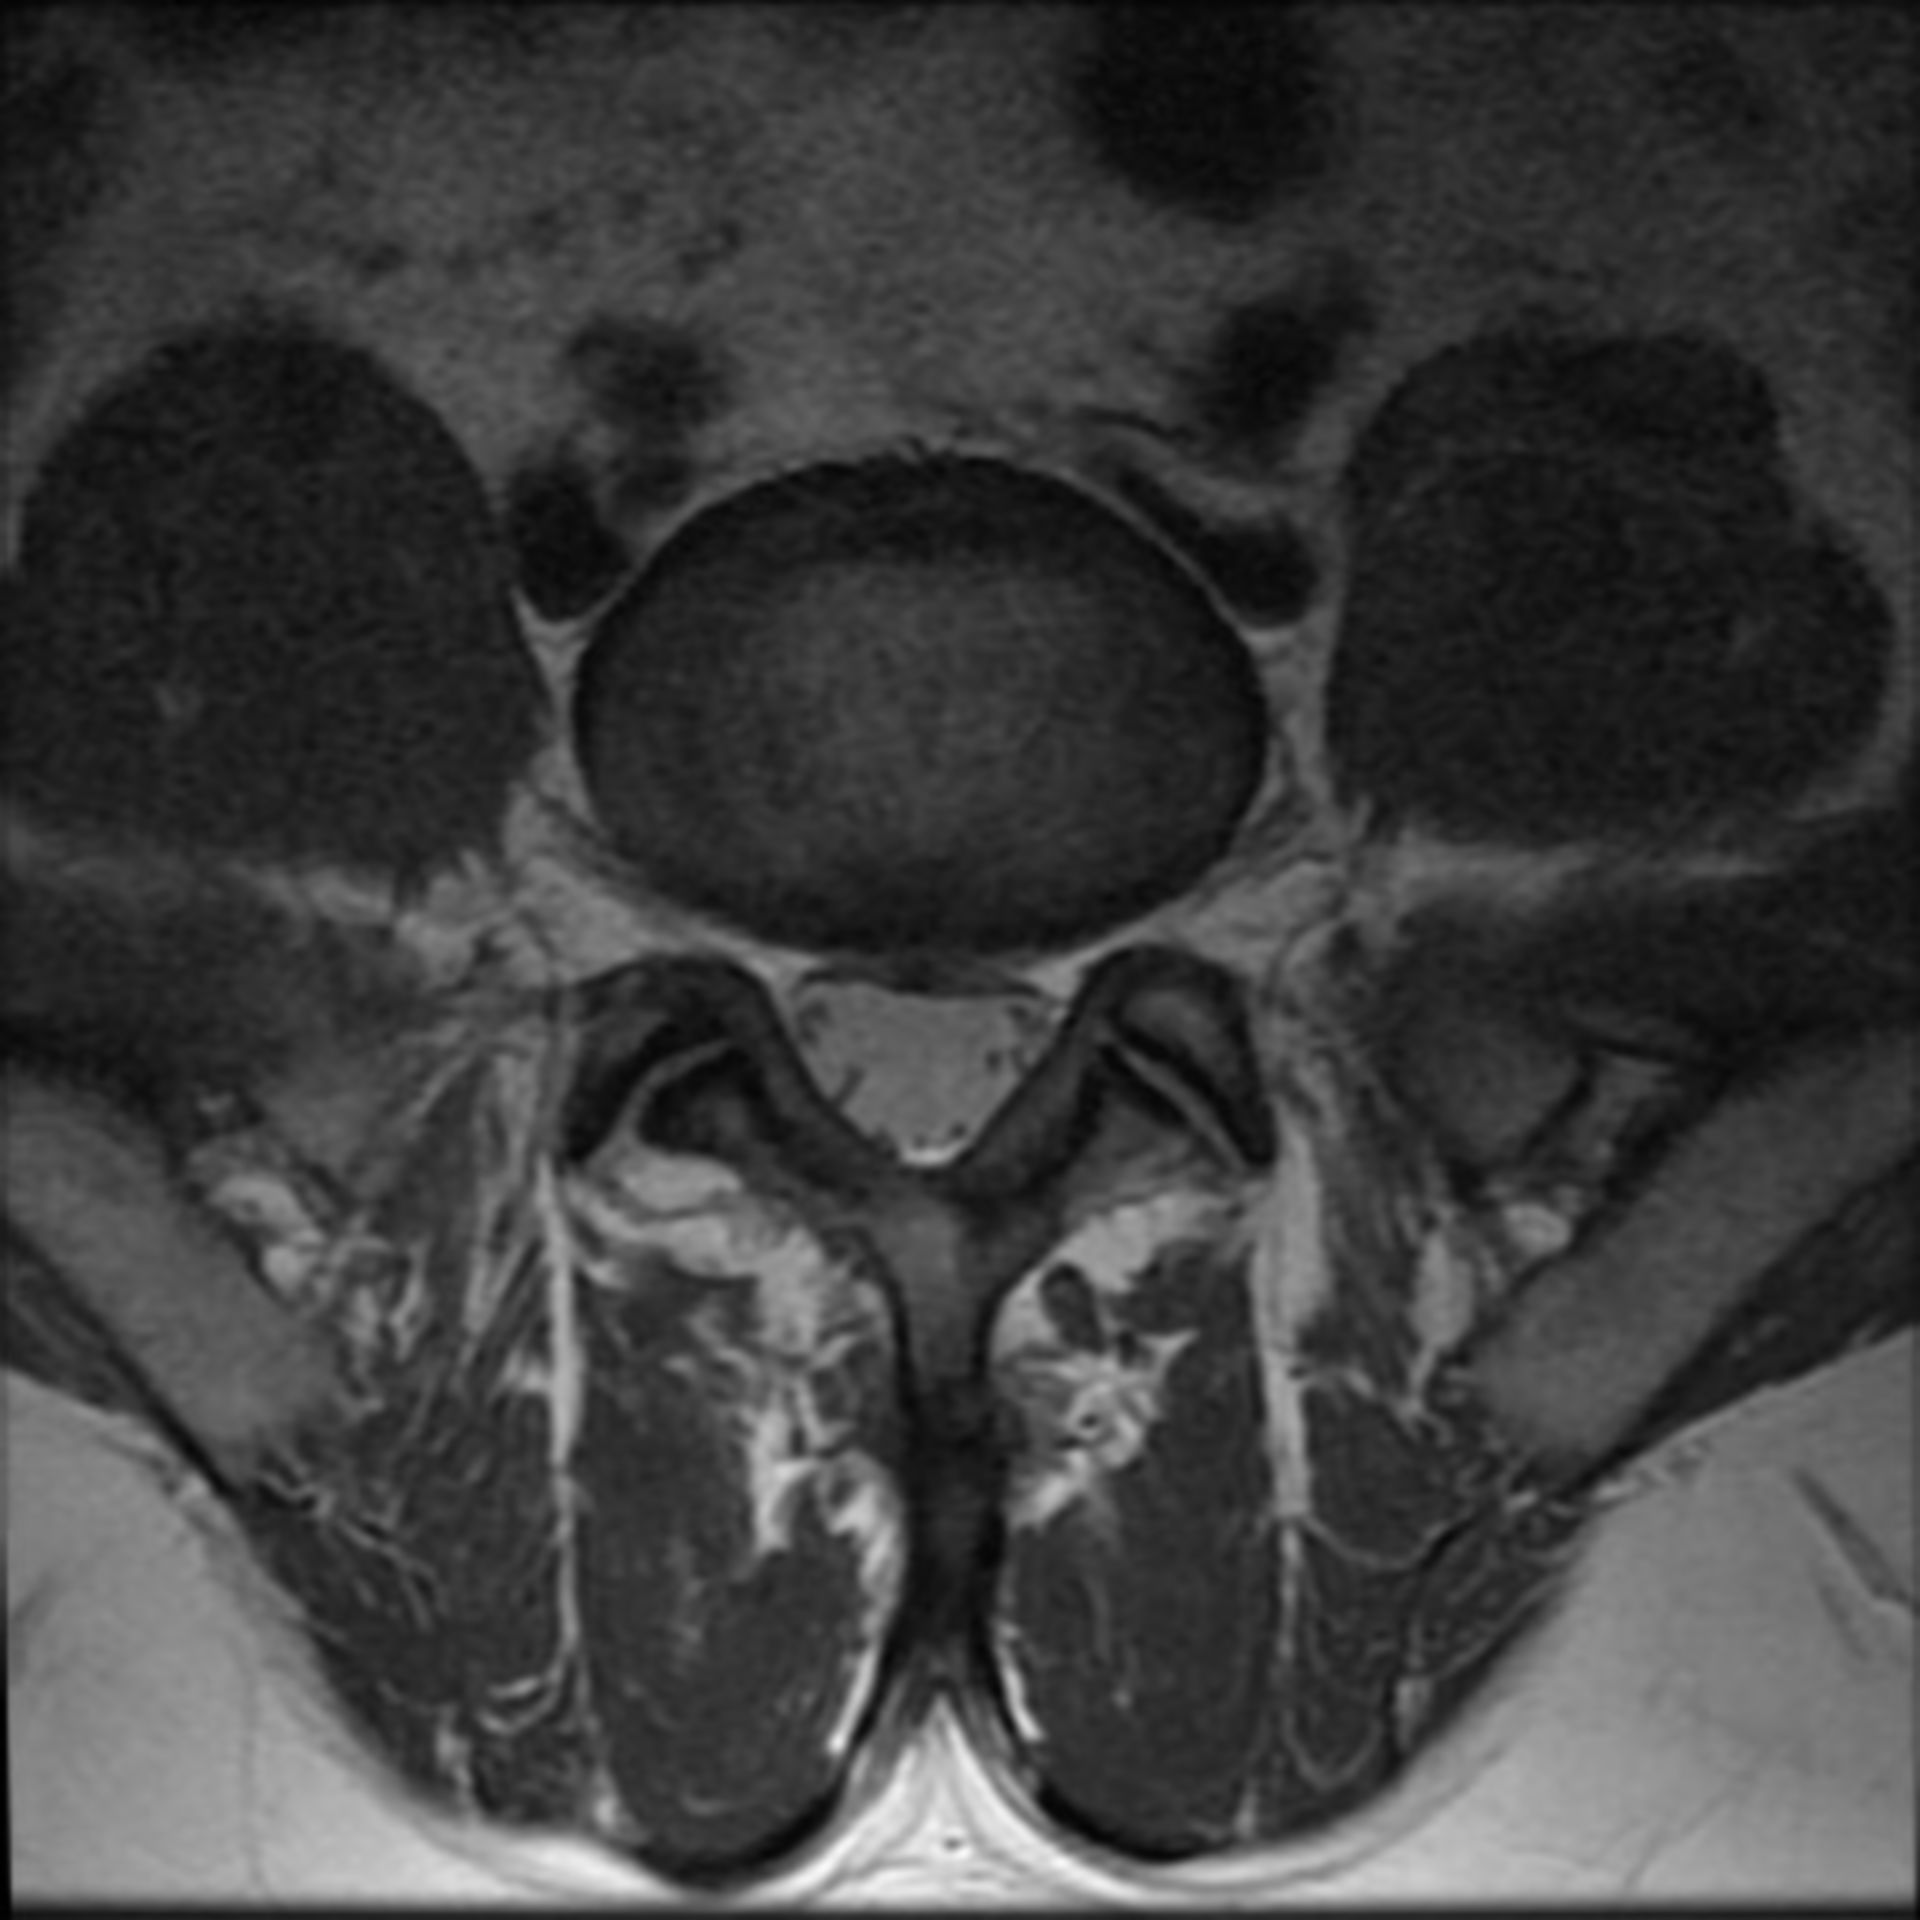 MRI scan pelvis